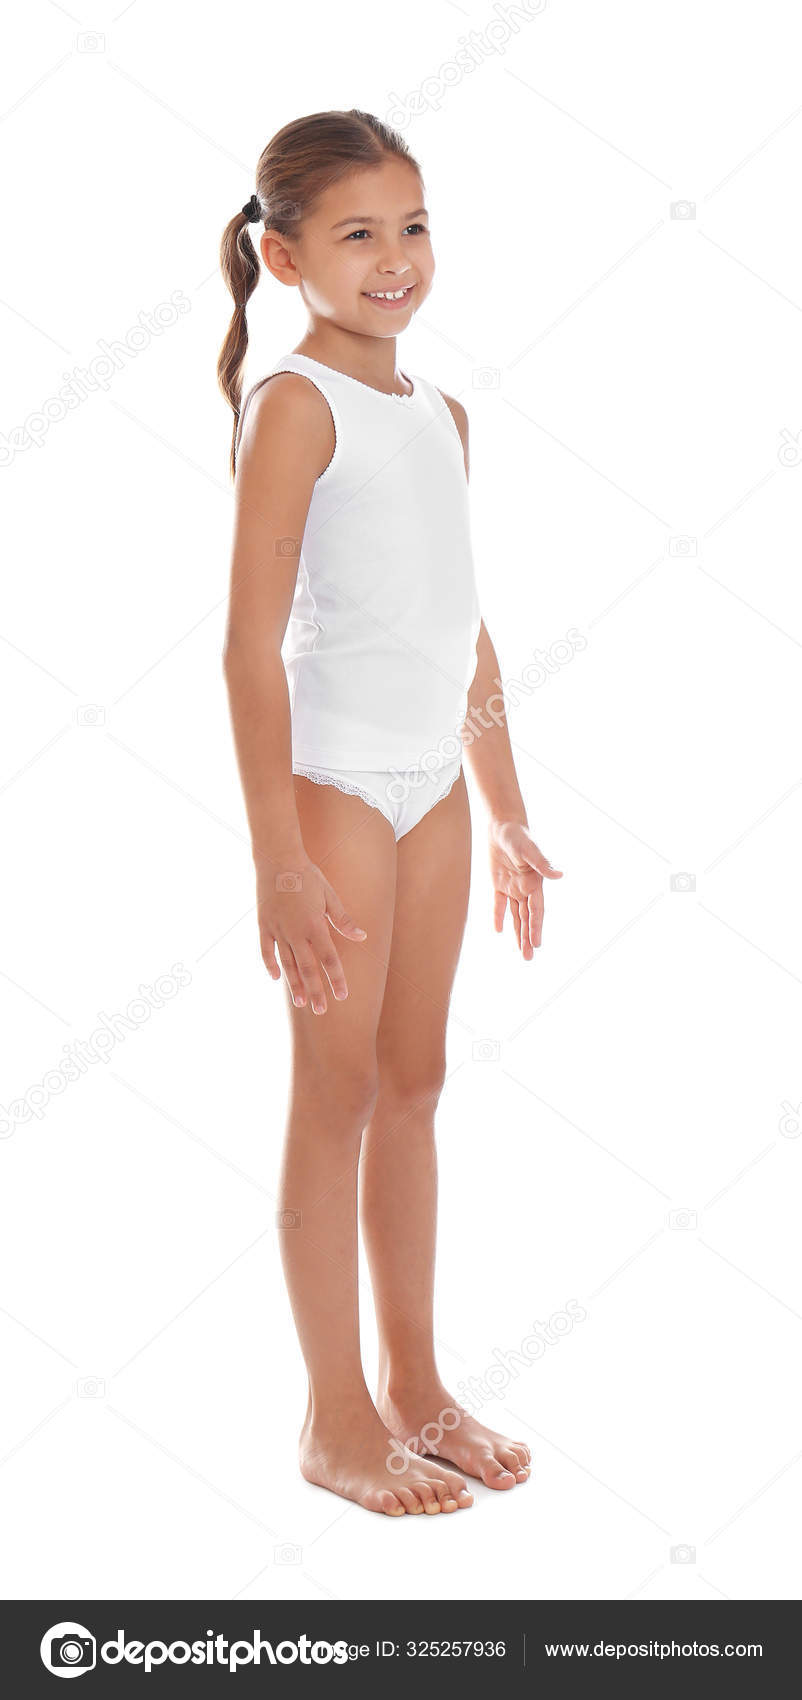 https://st3.depositphotos.com/16122460/32525/i/1600/depositphotos_325257936-stock-photo-cute-little-girl-underwear-white.jpg